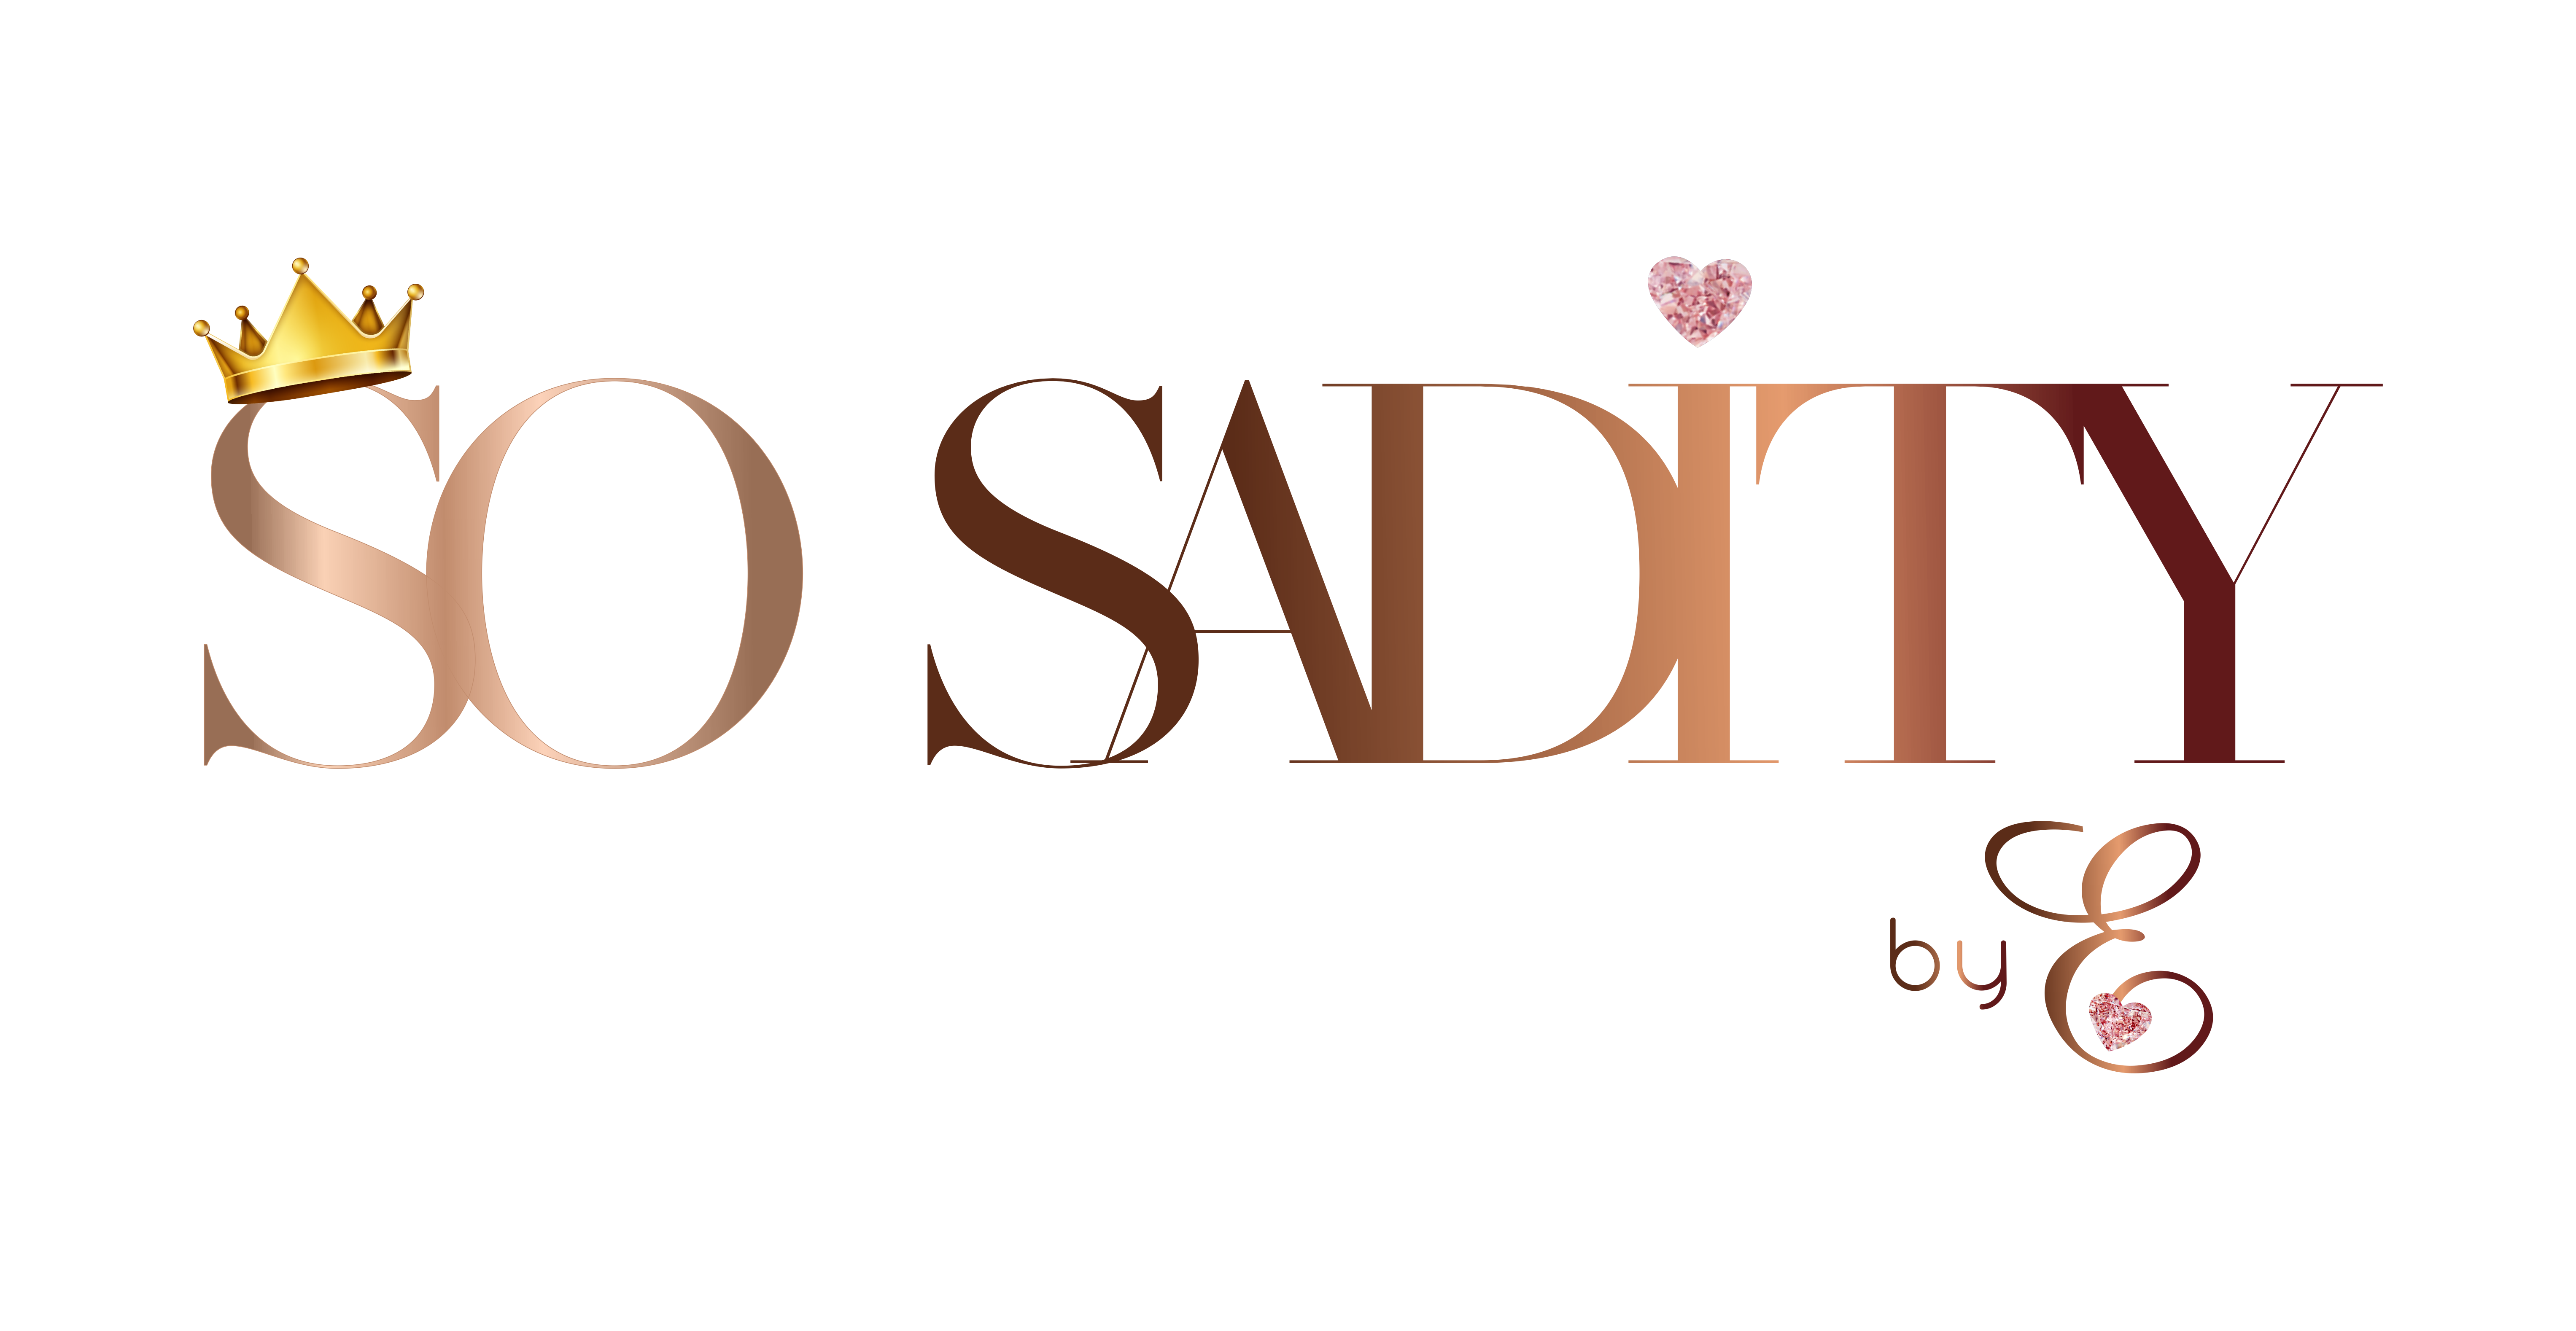 So Sadity by E